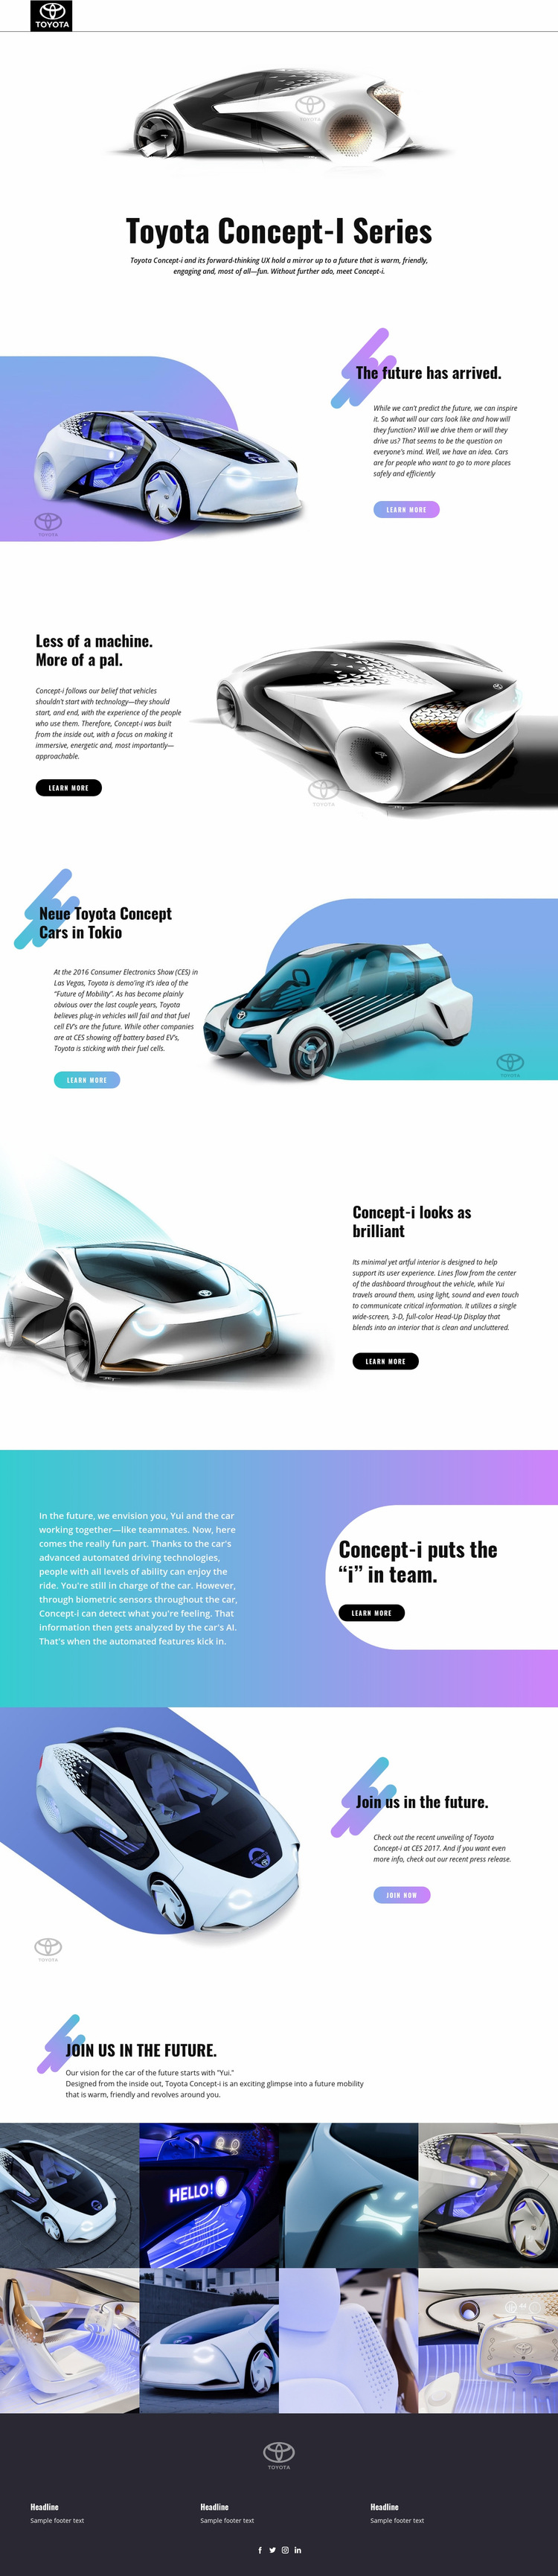 Advanced innovation cars Web Page Design